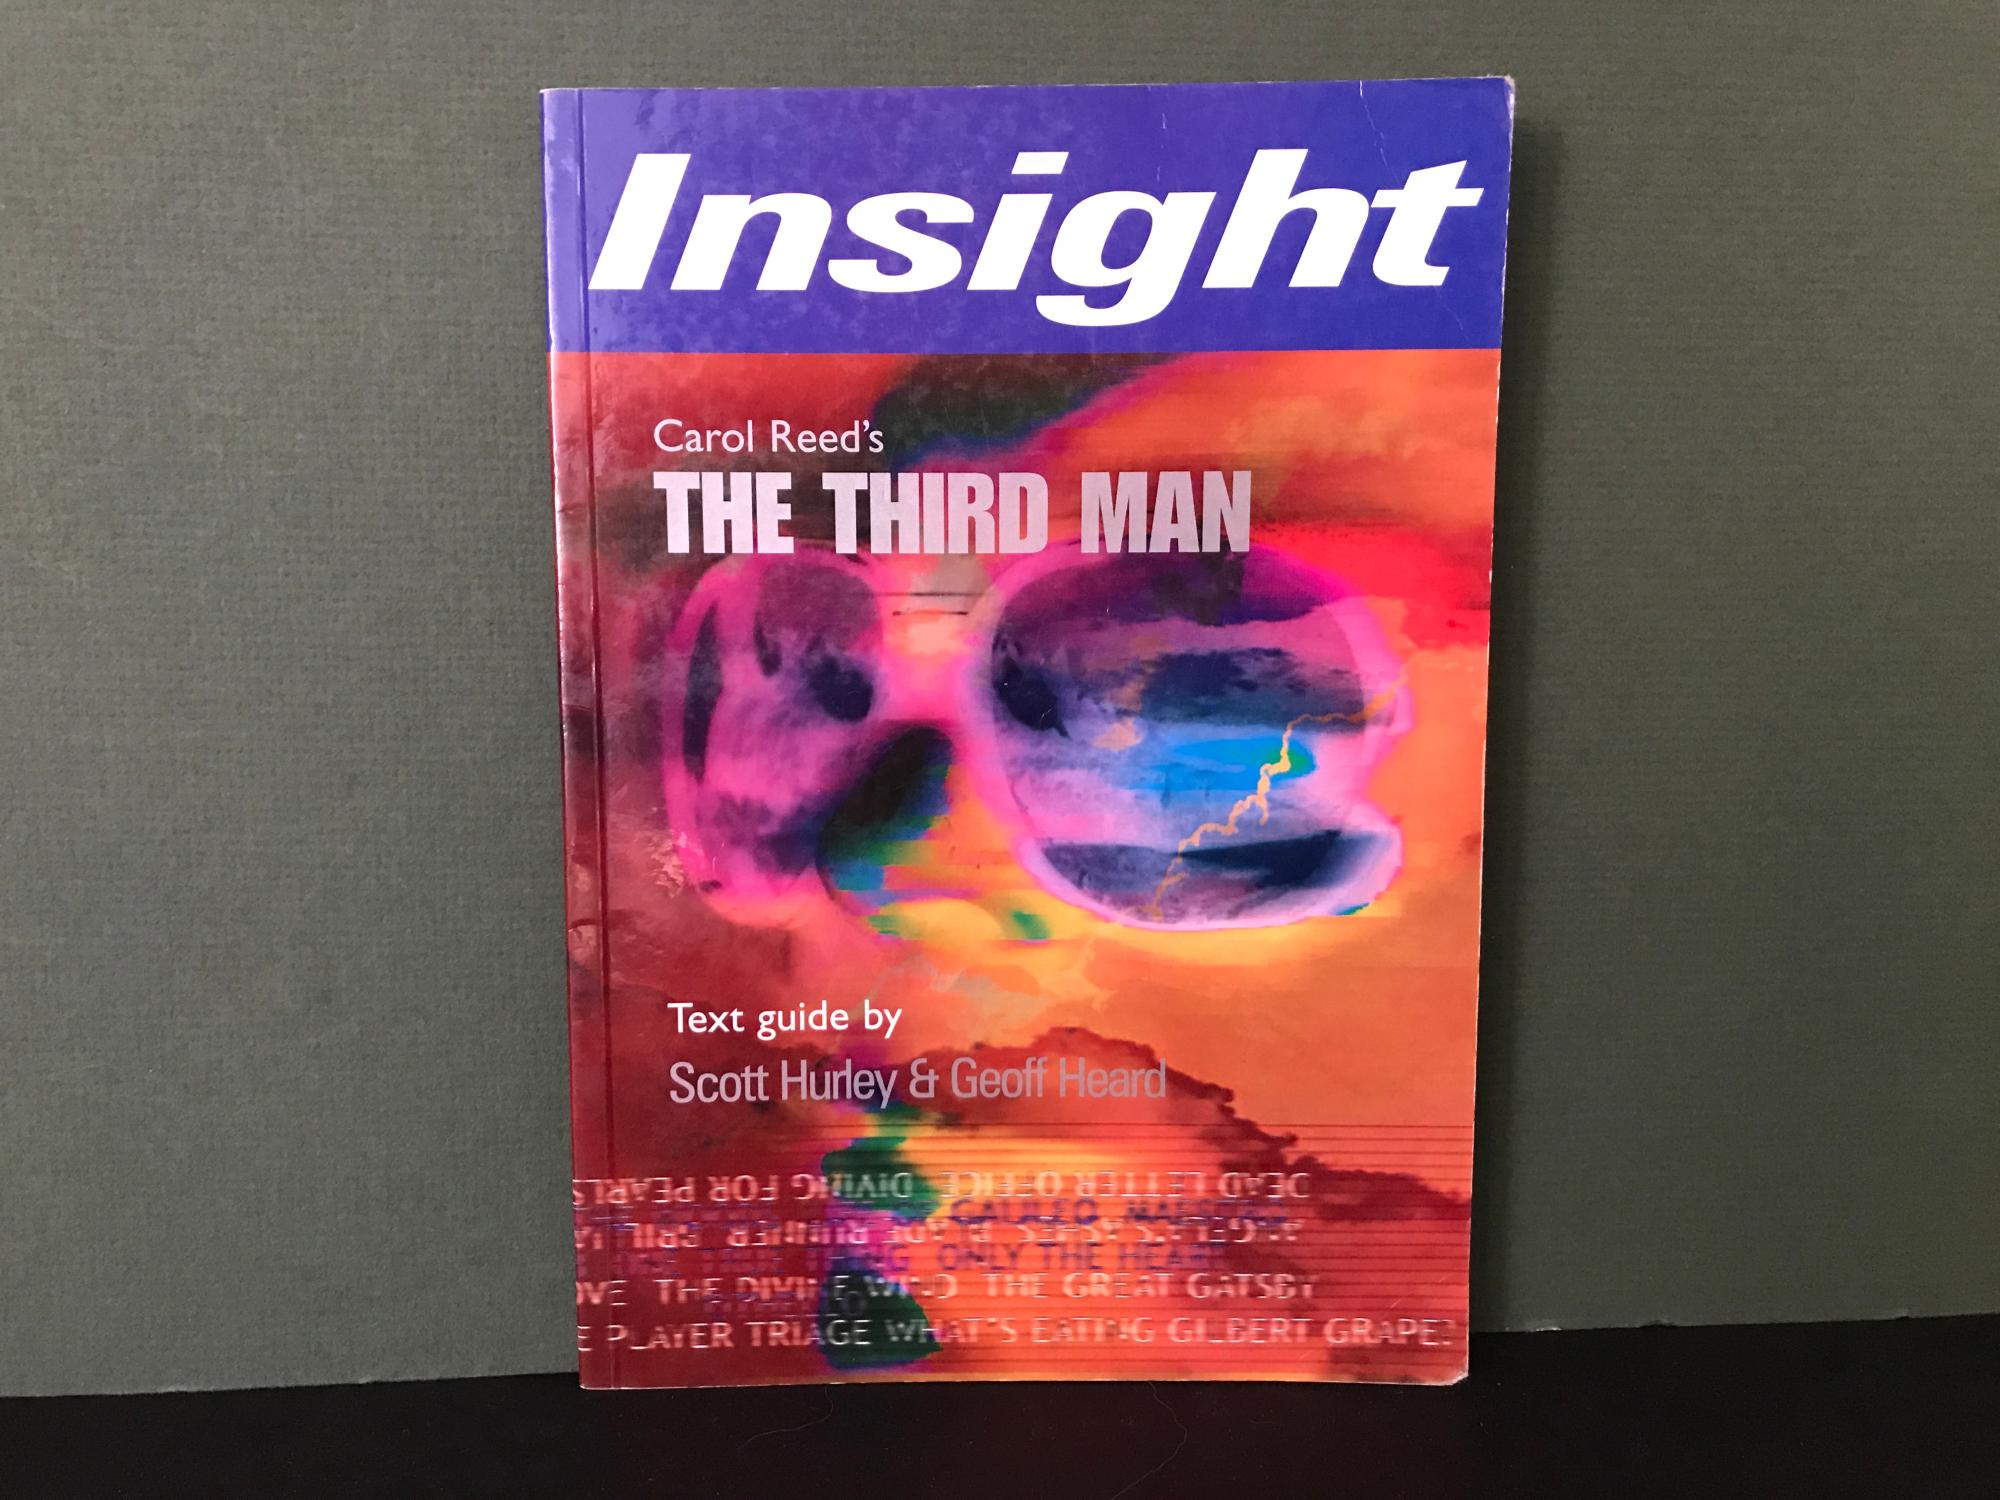 The Third Man - Graham Greene - Insight Text Guide - Hurley, Scott & Geoff Heard (Graham Greene; Carol Reed)